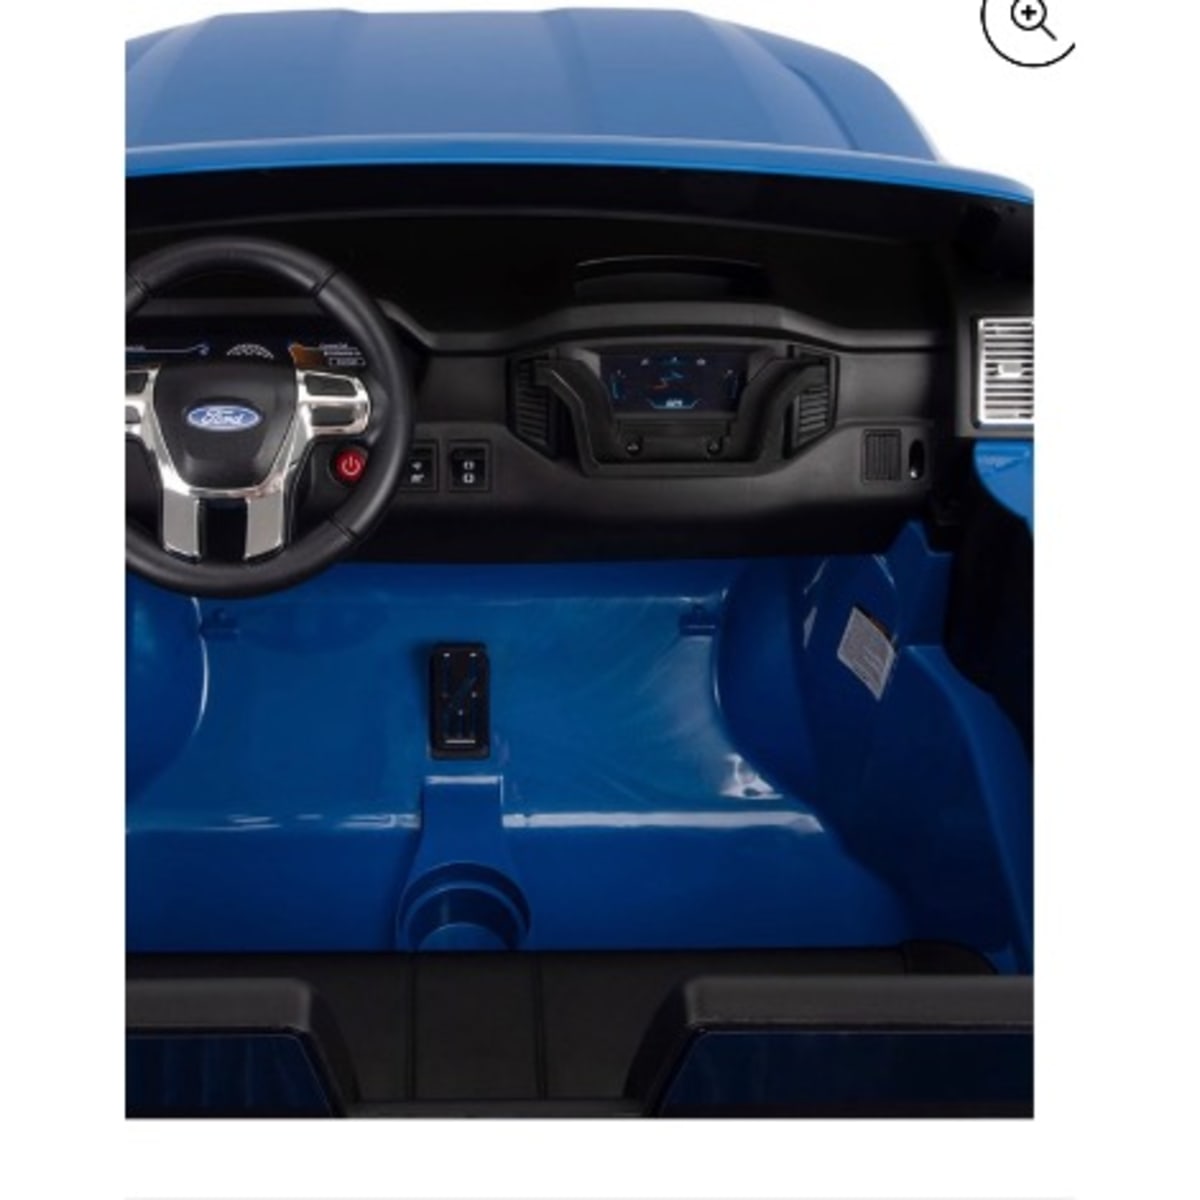 Huffy 12v Ford Ranger Lariat Ride-on Electric Car For Kids